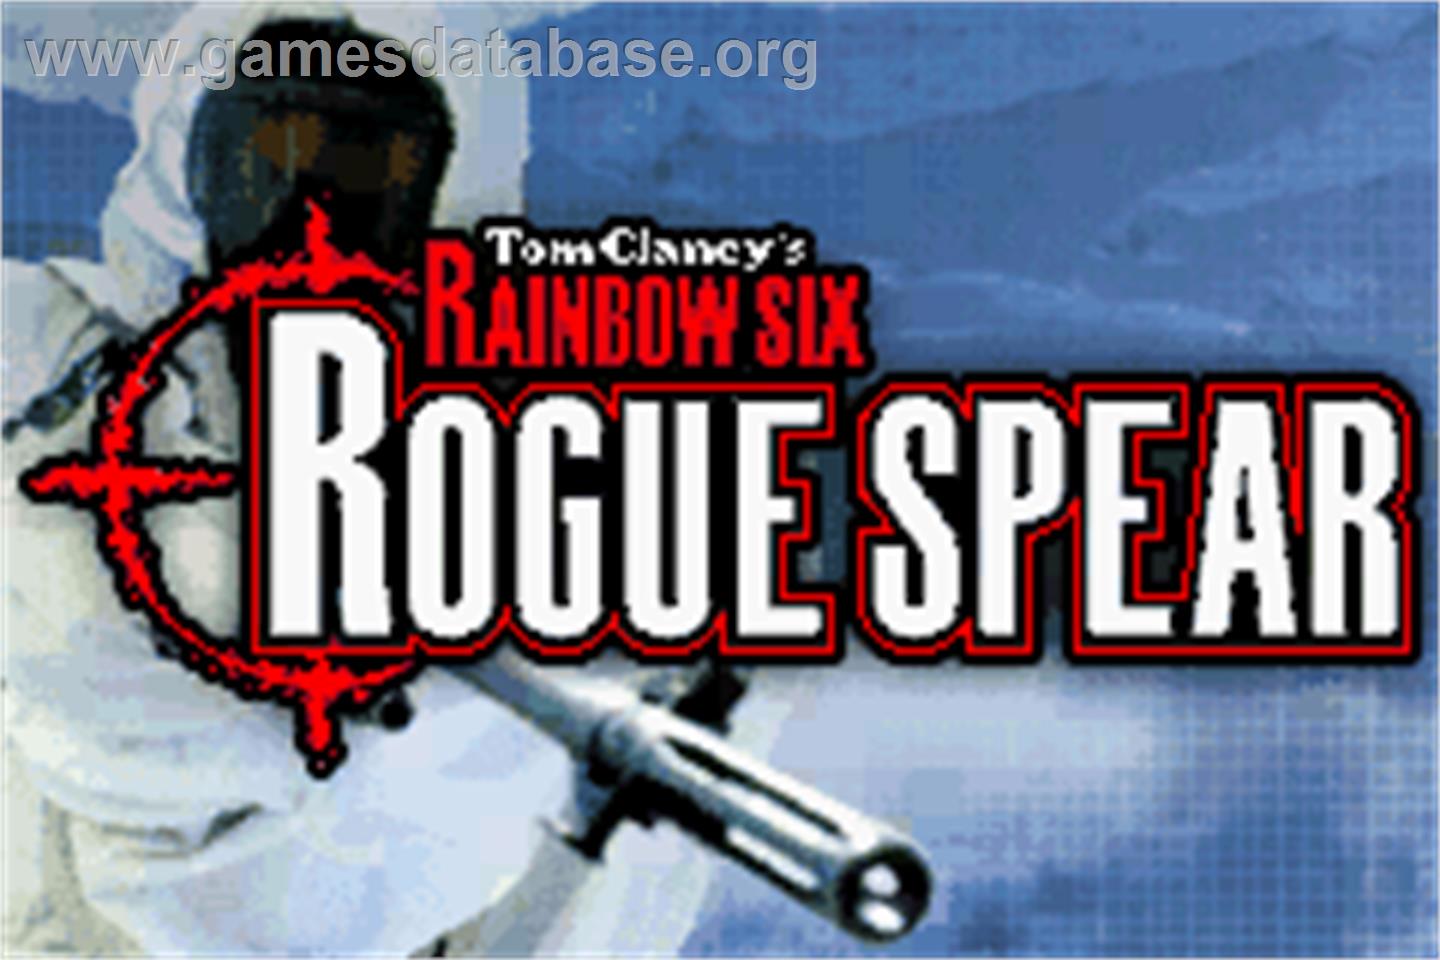 Tom Clancy's Rainbow Six: Rogue Spear - Nintendo Game Boy Advance - Artwork - Title Screen